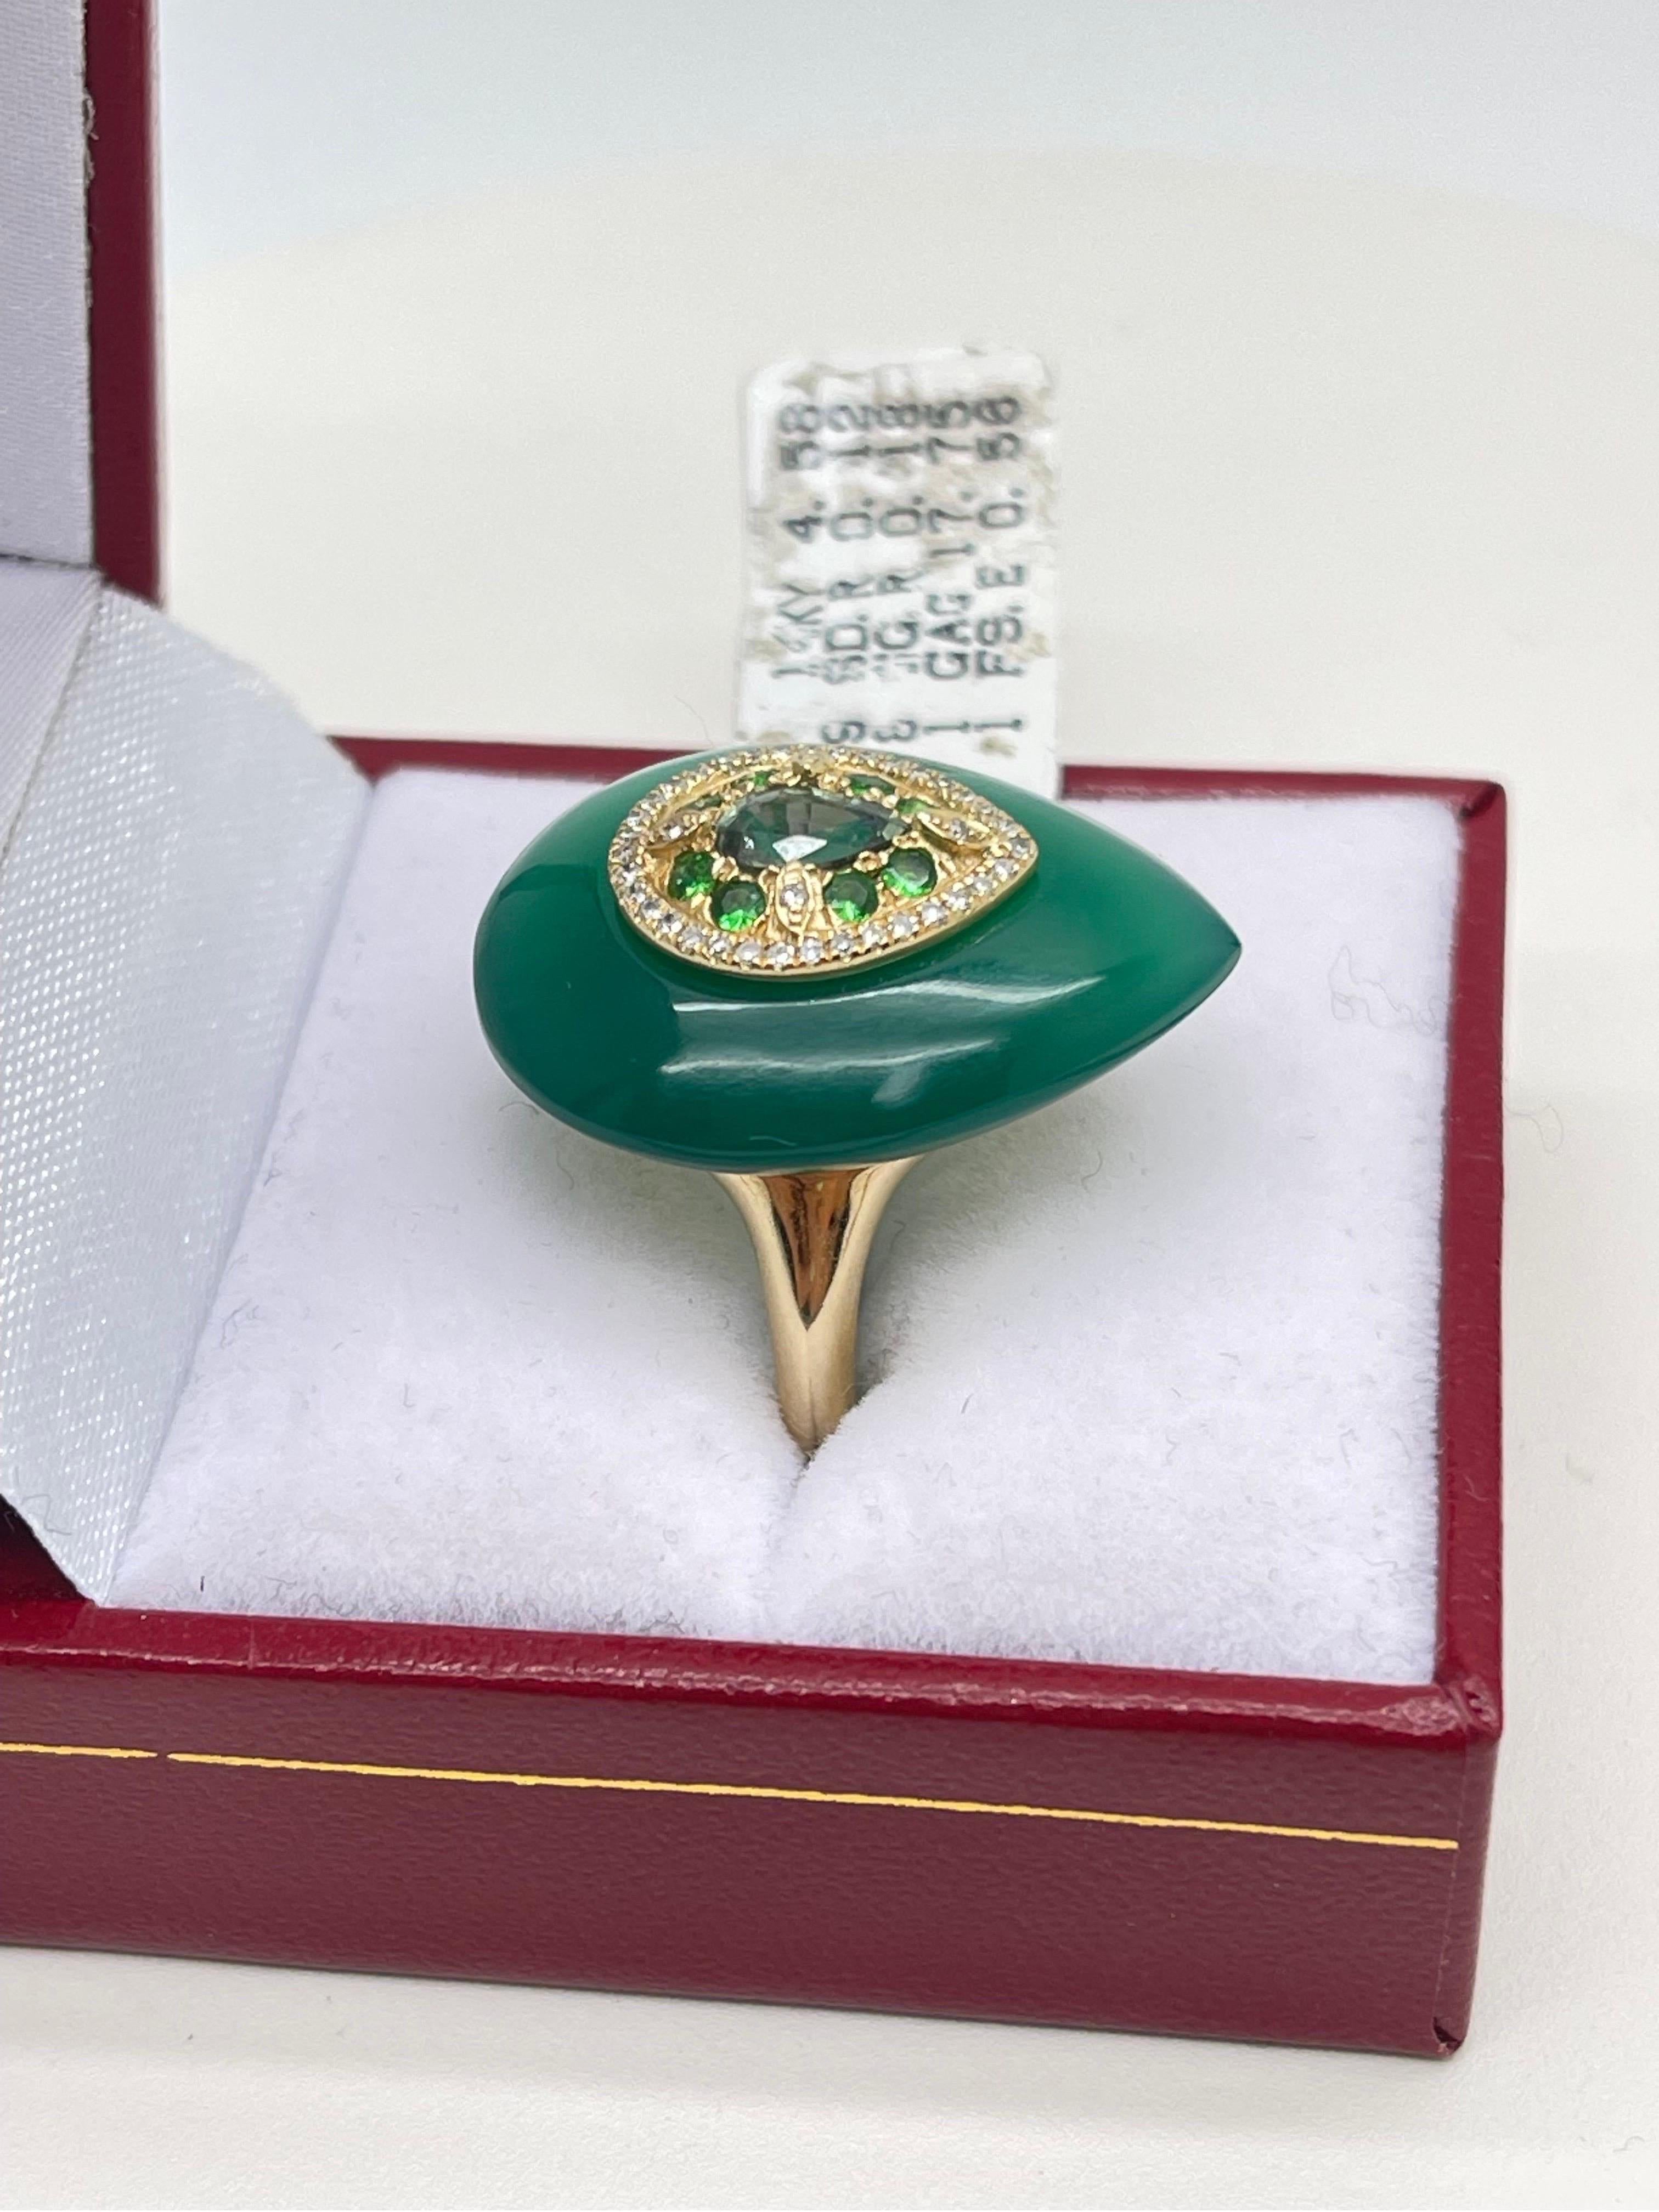 Vintage Green Agate, Emerald, Diamond & Green Garnet Ring In 14k. Size 6.5.

- 39 round cut diamonds 0.12 tcw,

- 8 green garnets 0.18 tcw,

- 1 green agate 17.75 tcw,

- 1 emerald 0.56 tcw